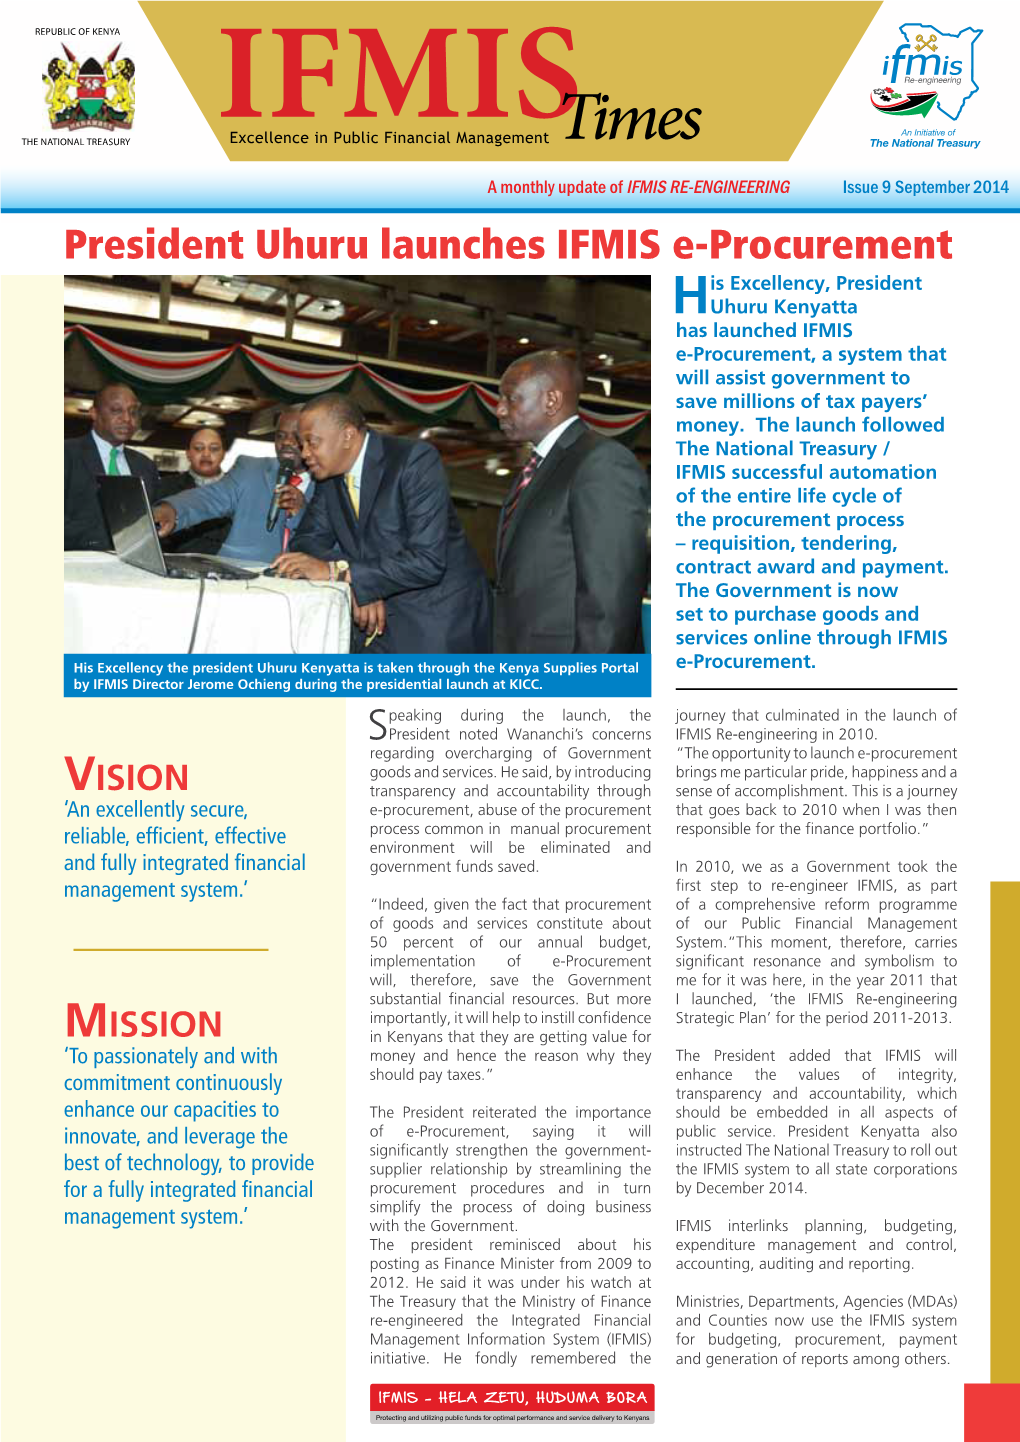 President Uhuru Launches IFMIS E-Procurement